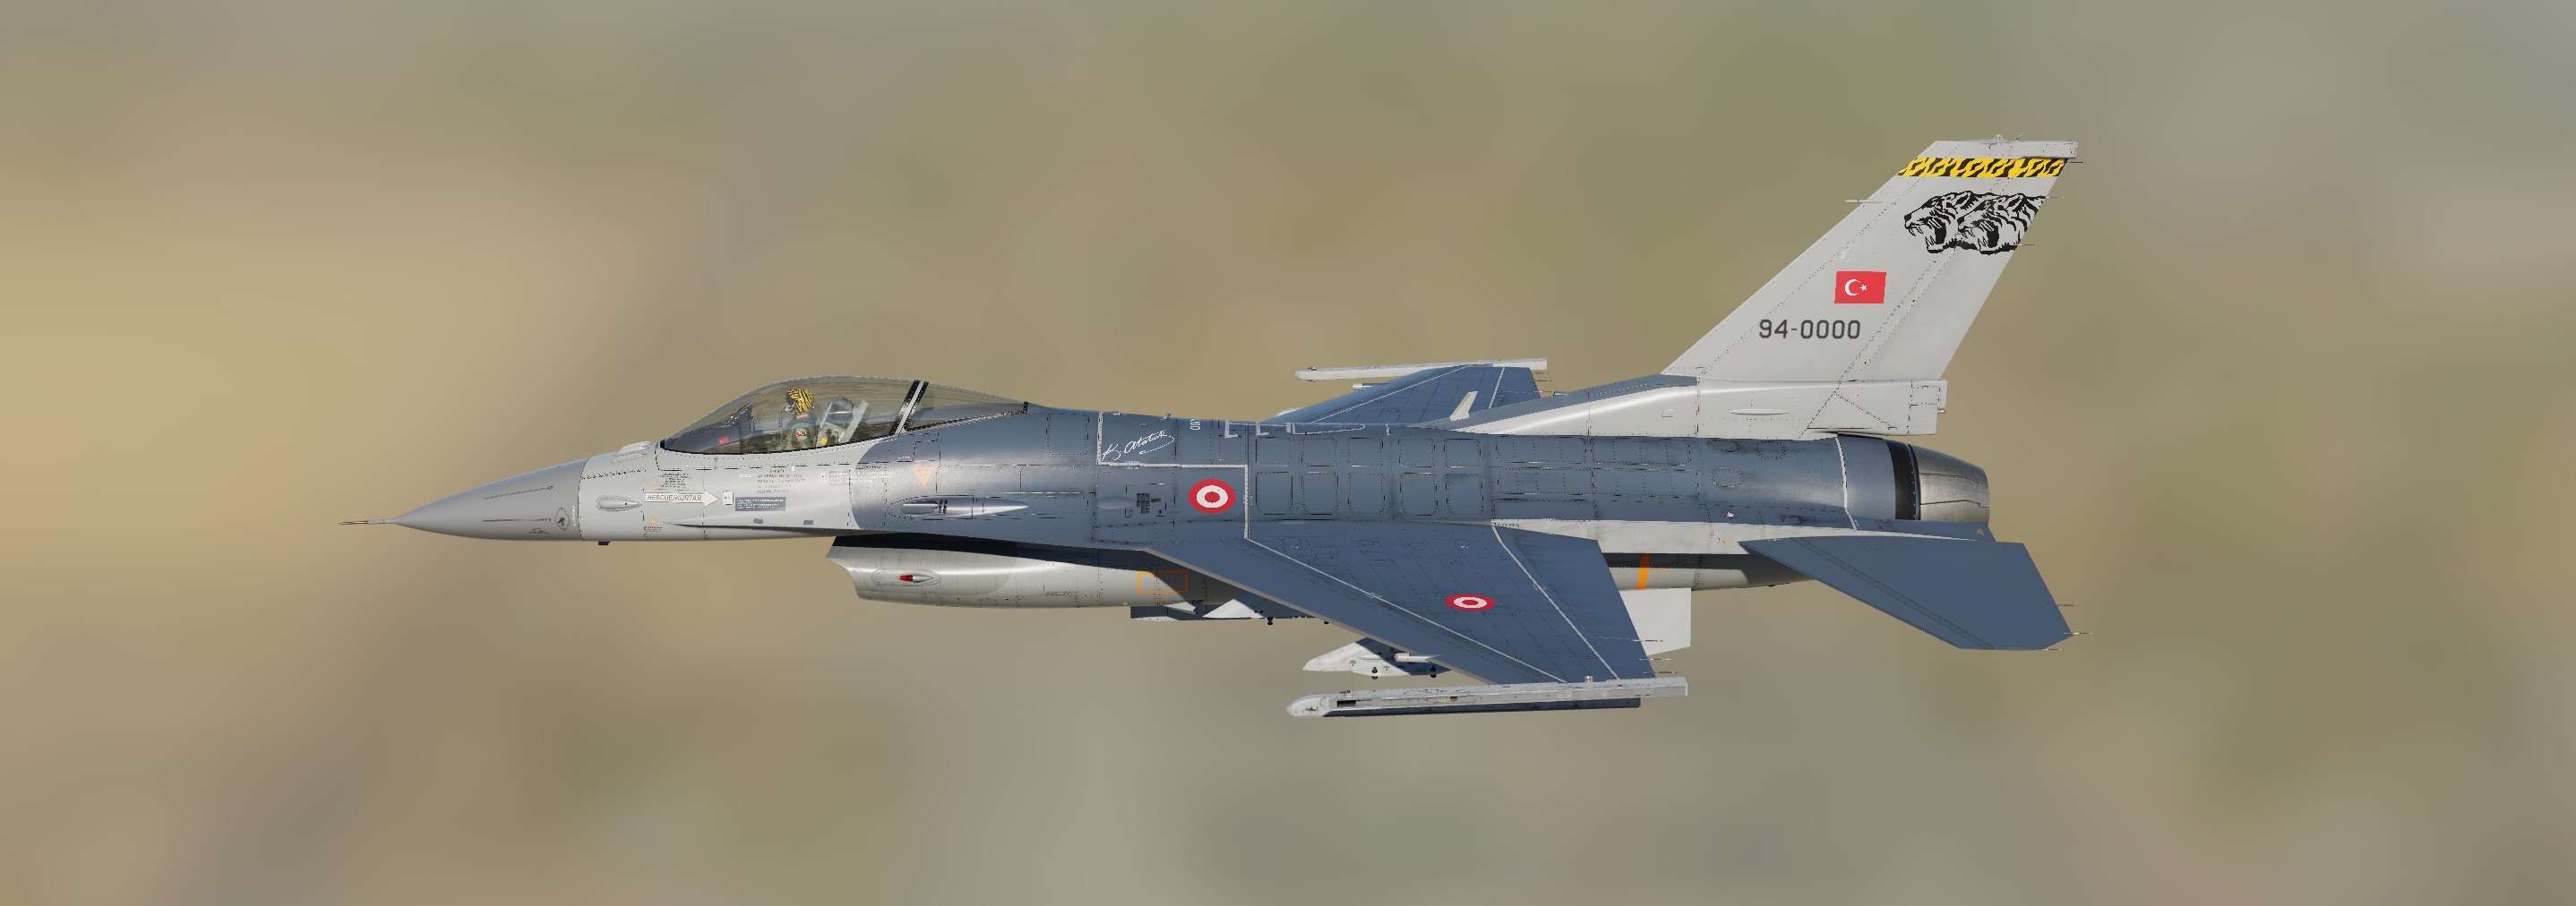 Turkish Air Force 192.Kaplan Filo_High resolution